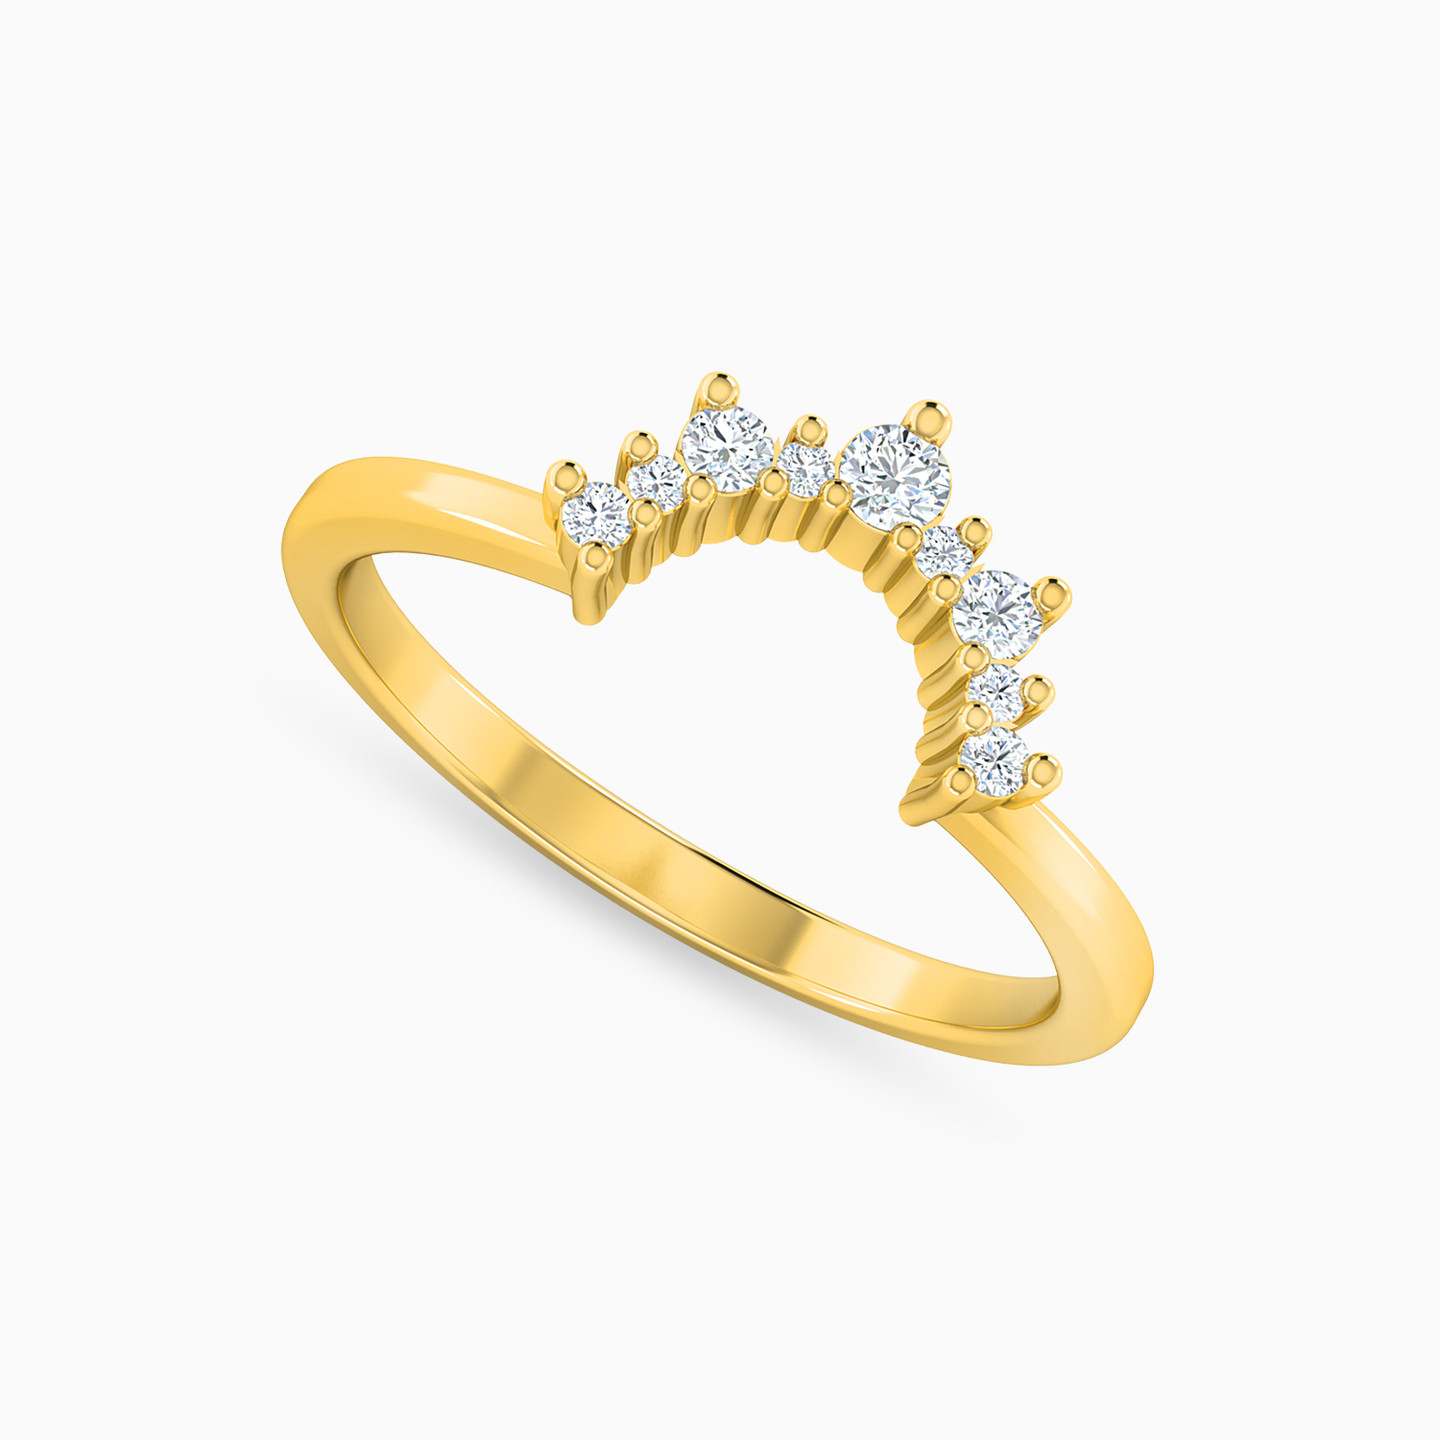 18K Gold Diamond Statement Ring - 2